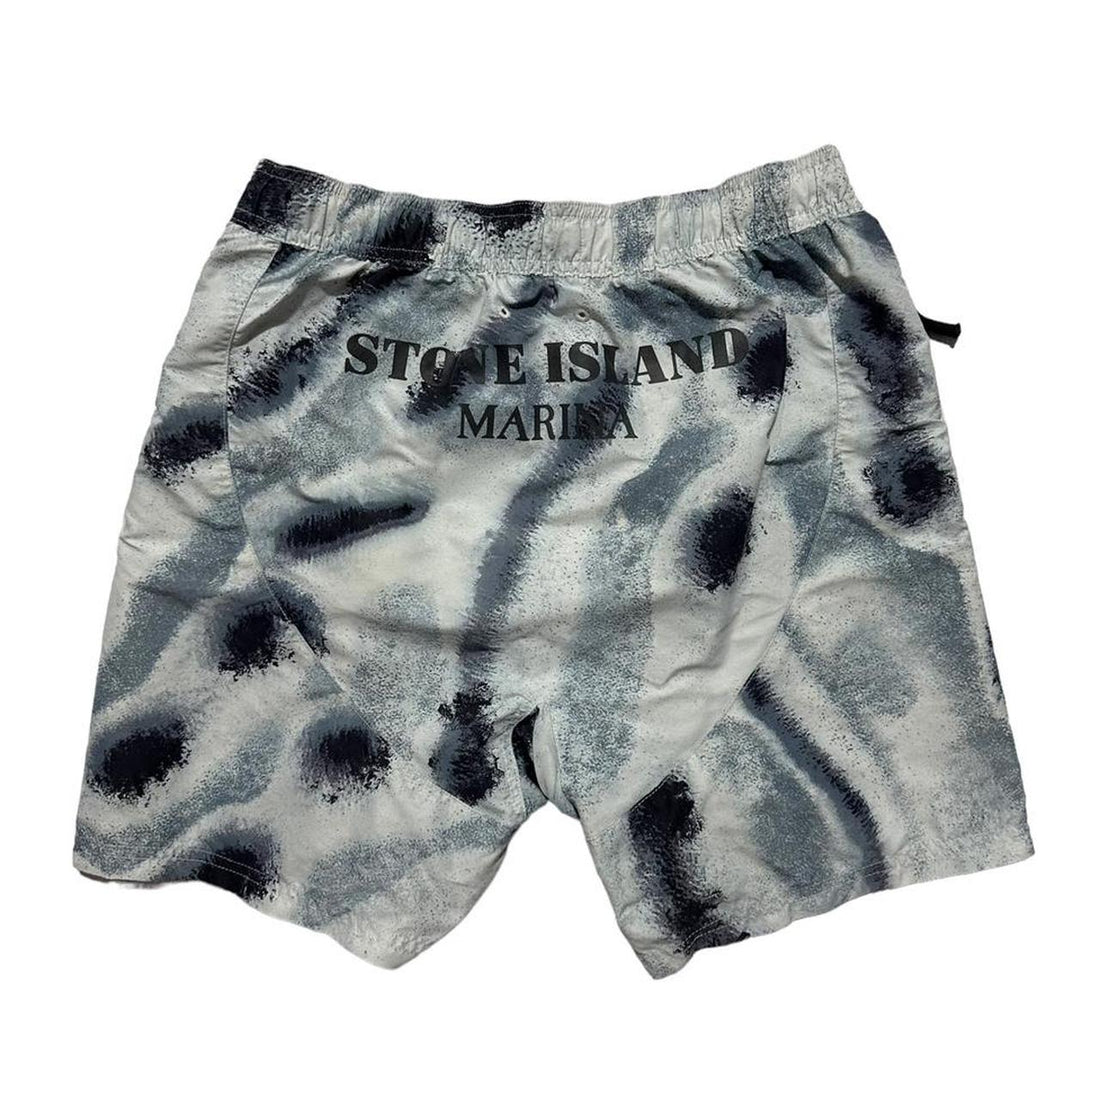 Stone Island Marina Camo Swim Shorts